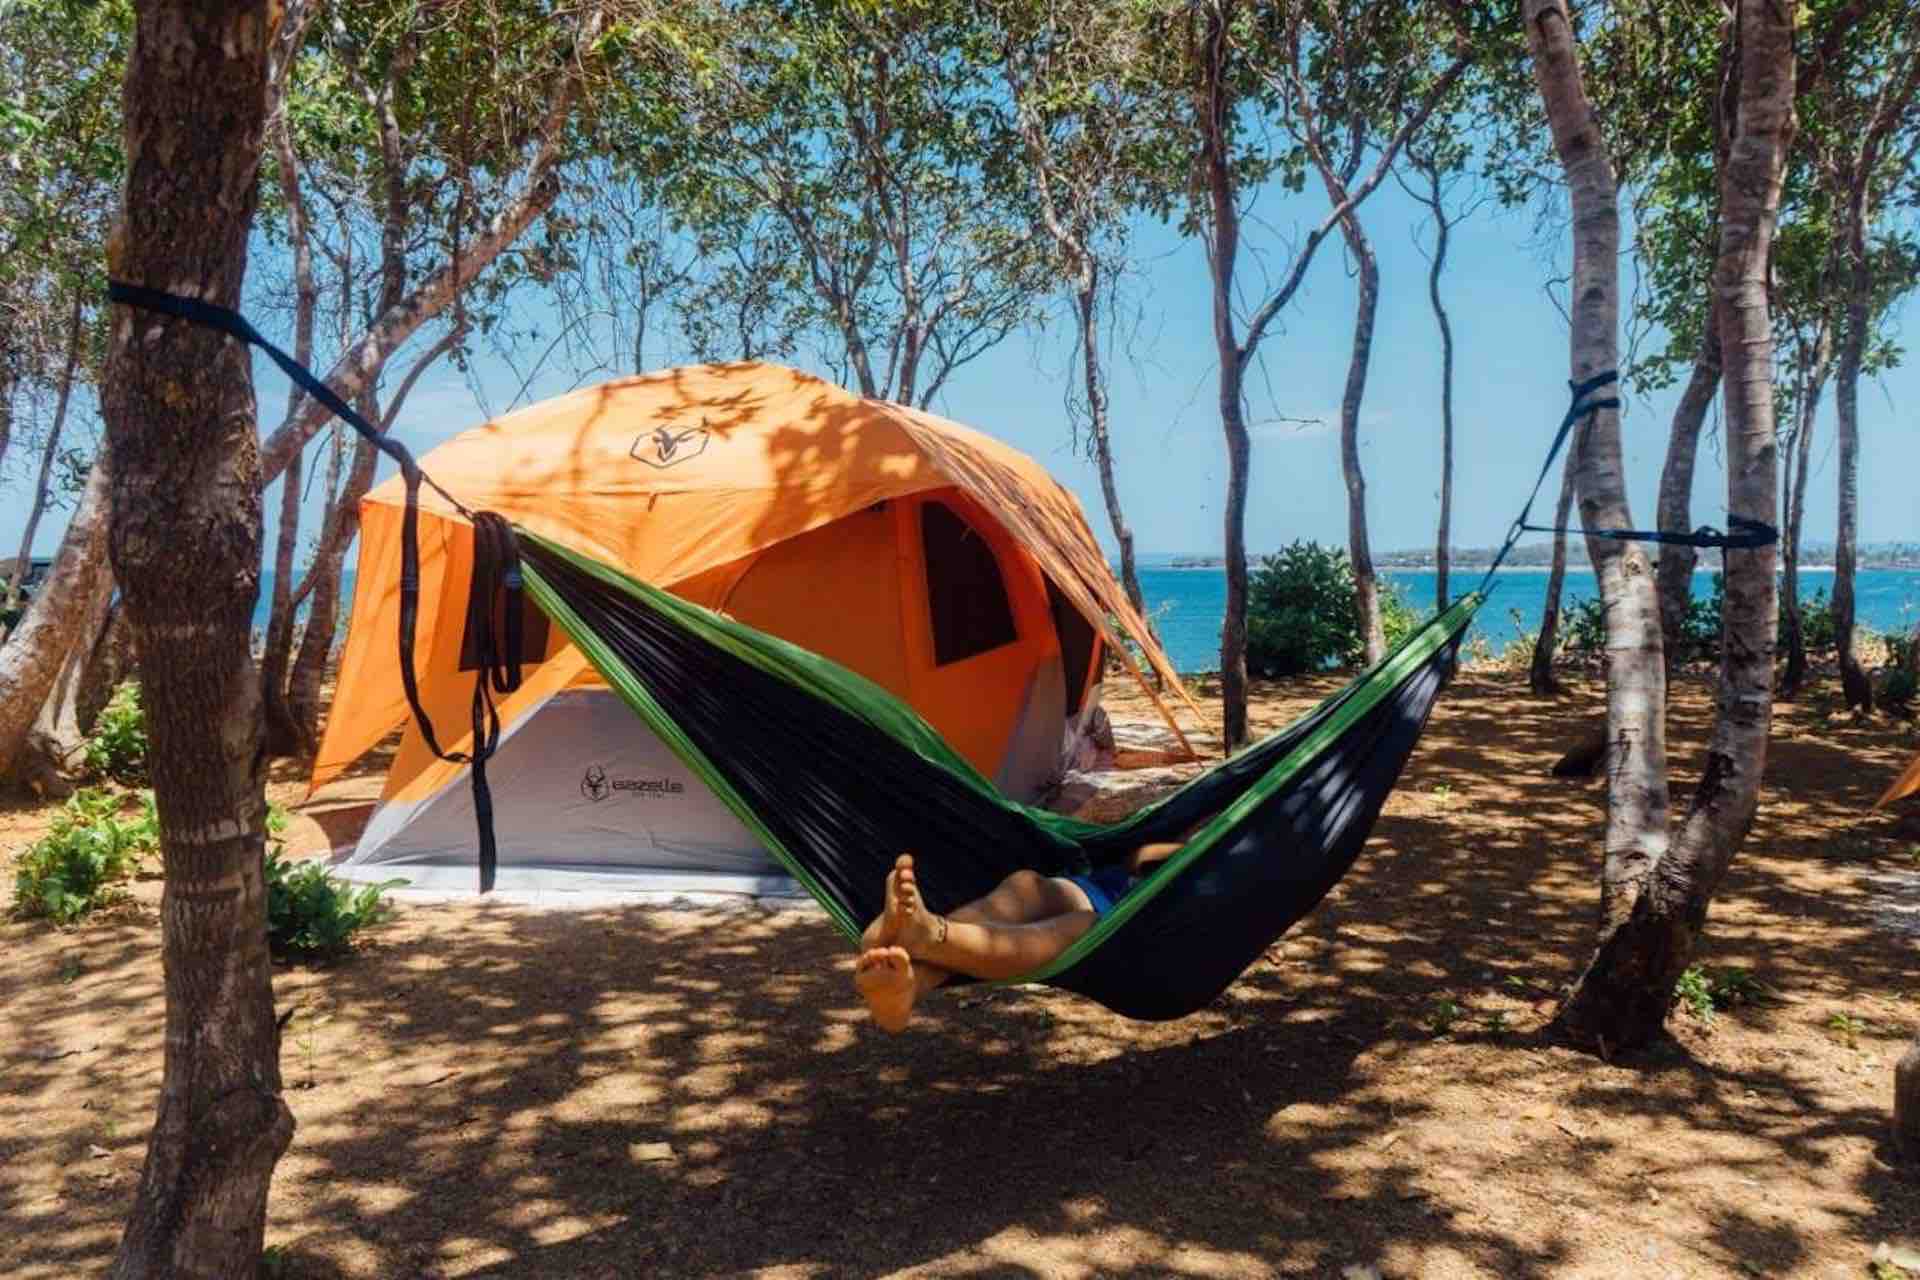 Las Perlas island Sonny Island Resort Panama hammock and tent